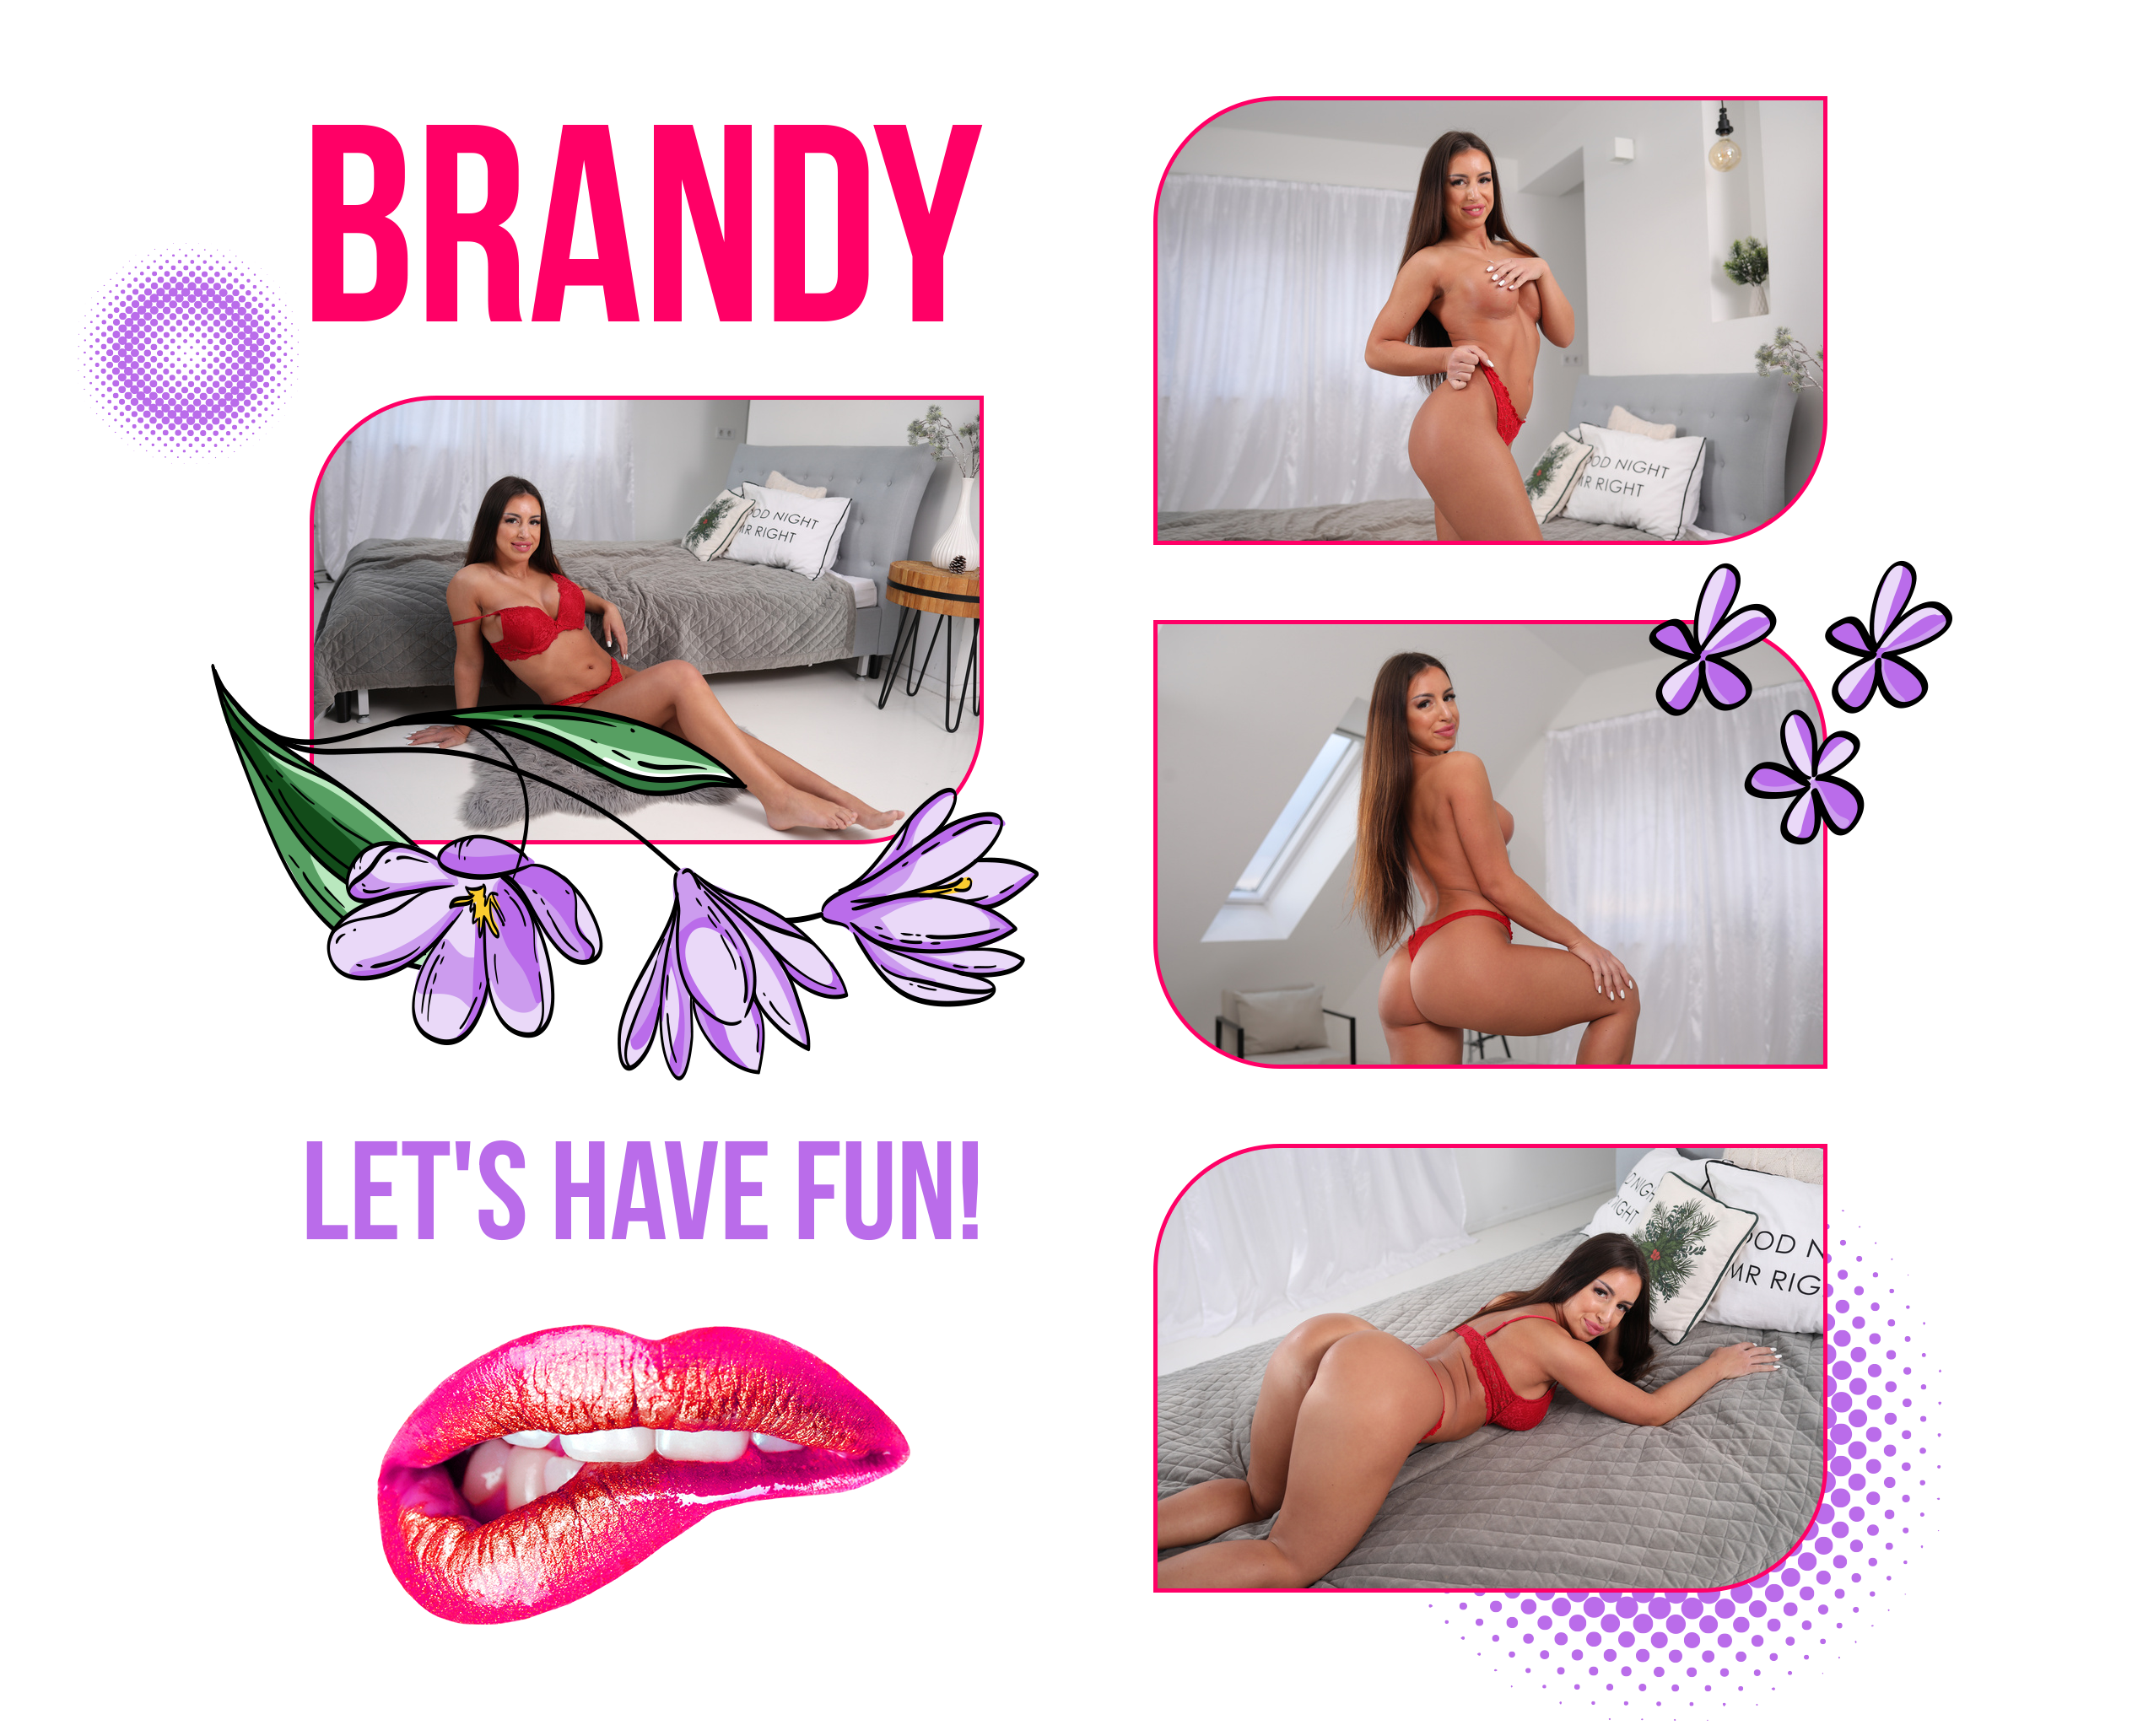 BrandyNash Hello sweeties. Let's play! image: 1